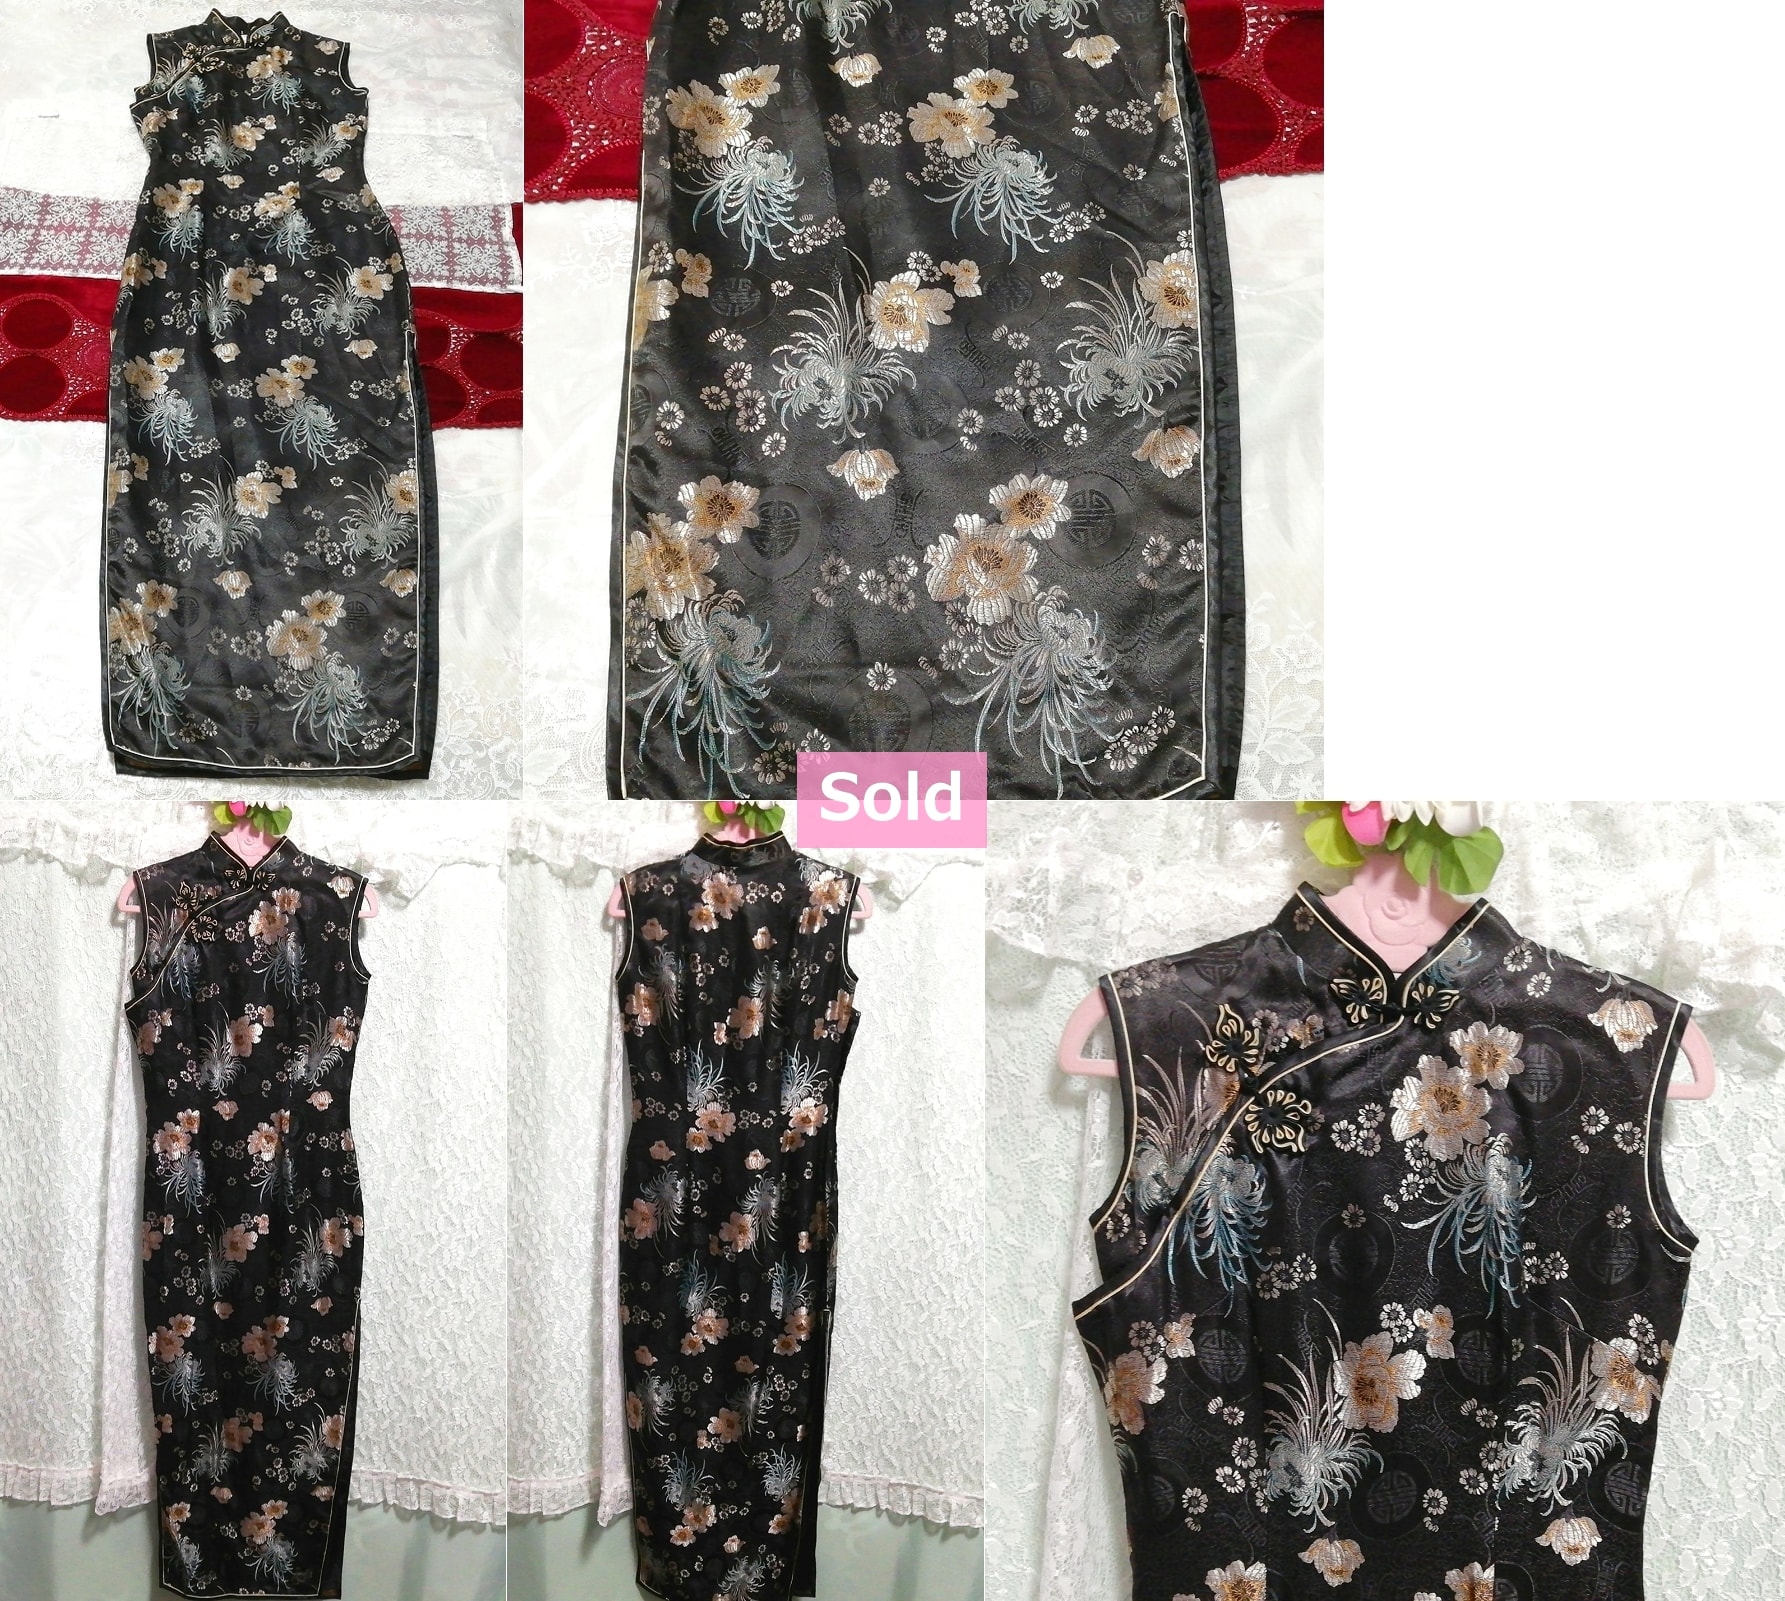 Floral print black cheongsam maxi dress, ladies' fashion, formal, dress